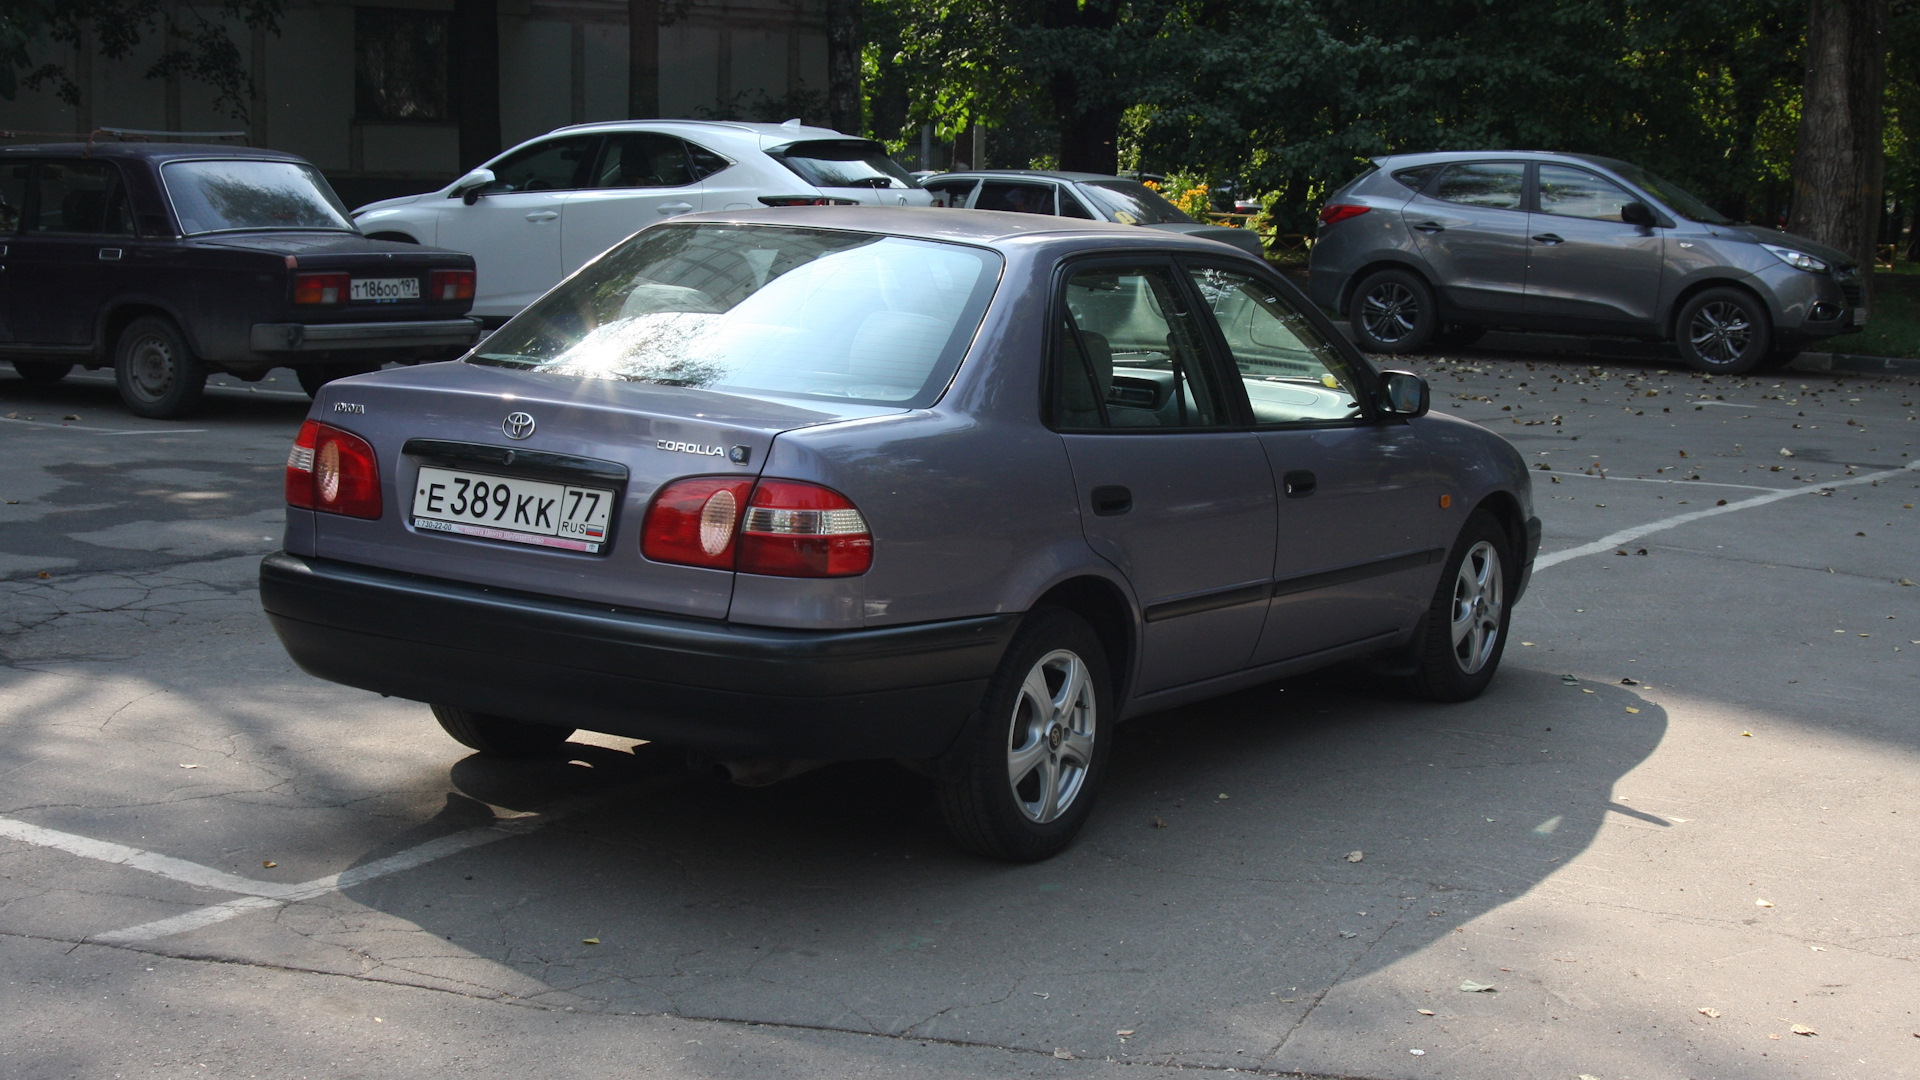 30 июня 1998 г. Toyota Corolla 1998г. Тойота Королла 1998г. Машины 1998. Сооба машина 1998.